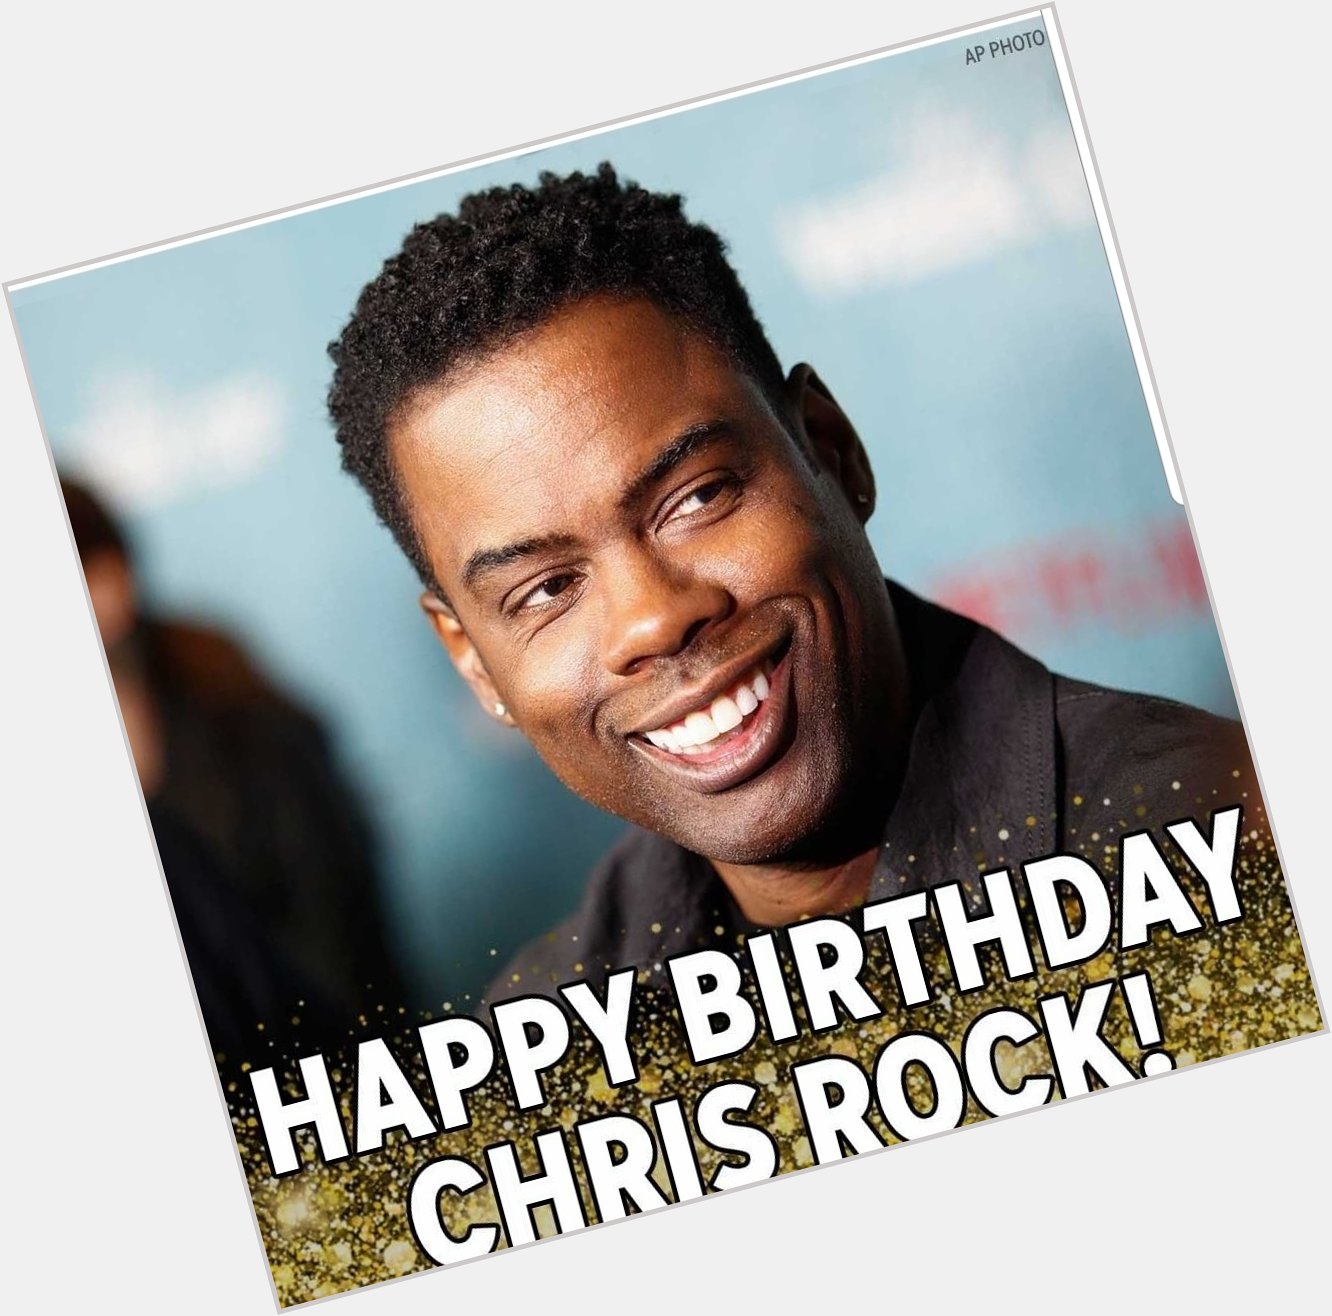 Happy birthday Chris Rock!!!! 